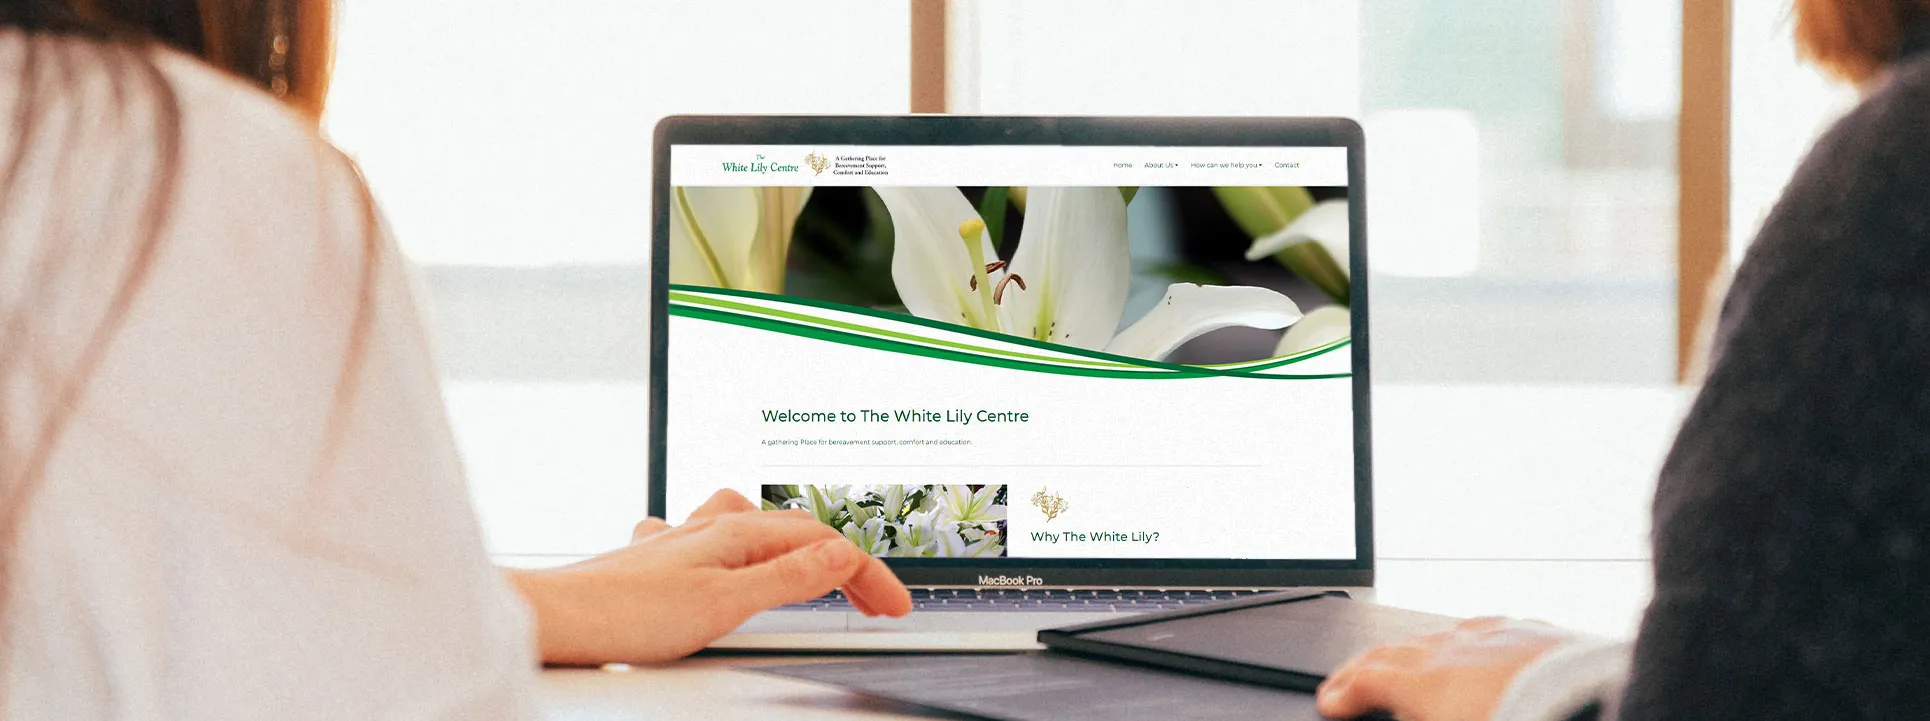 Sympathetic Website Design for Bereavement Support Centre